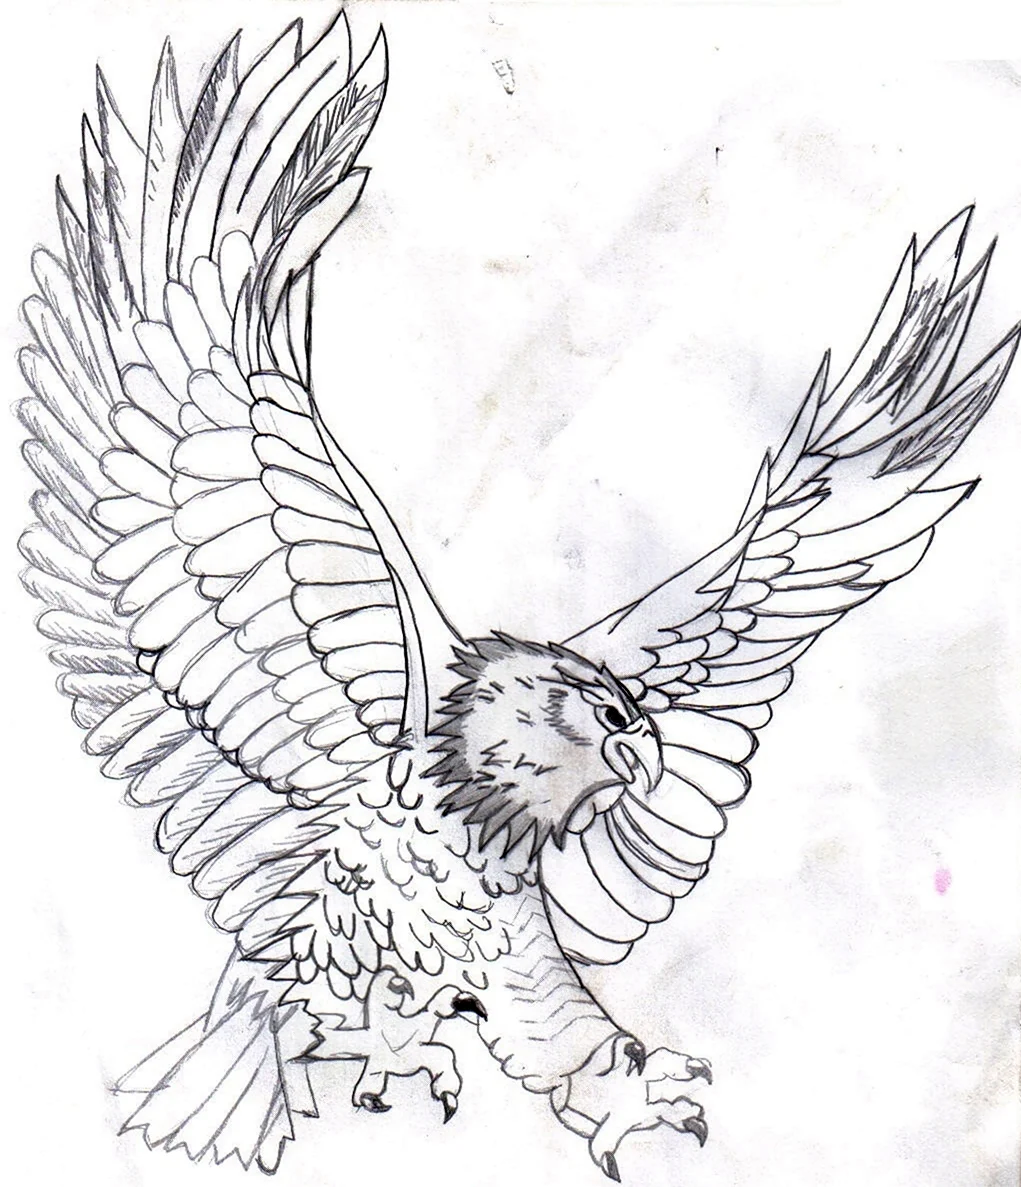 Рисунок орла карандашом для срисовки. Для срисовки